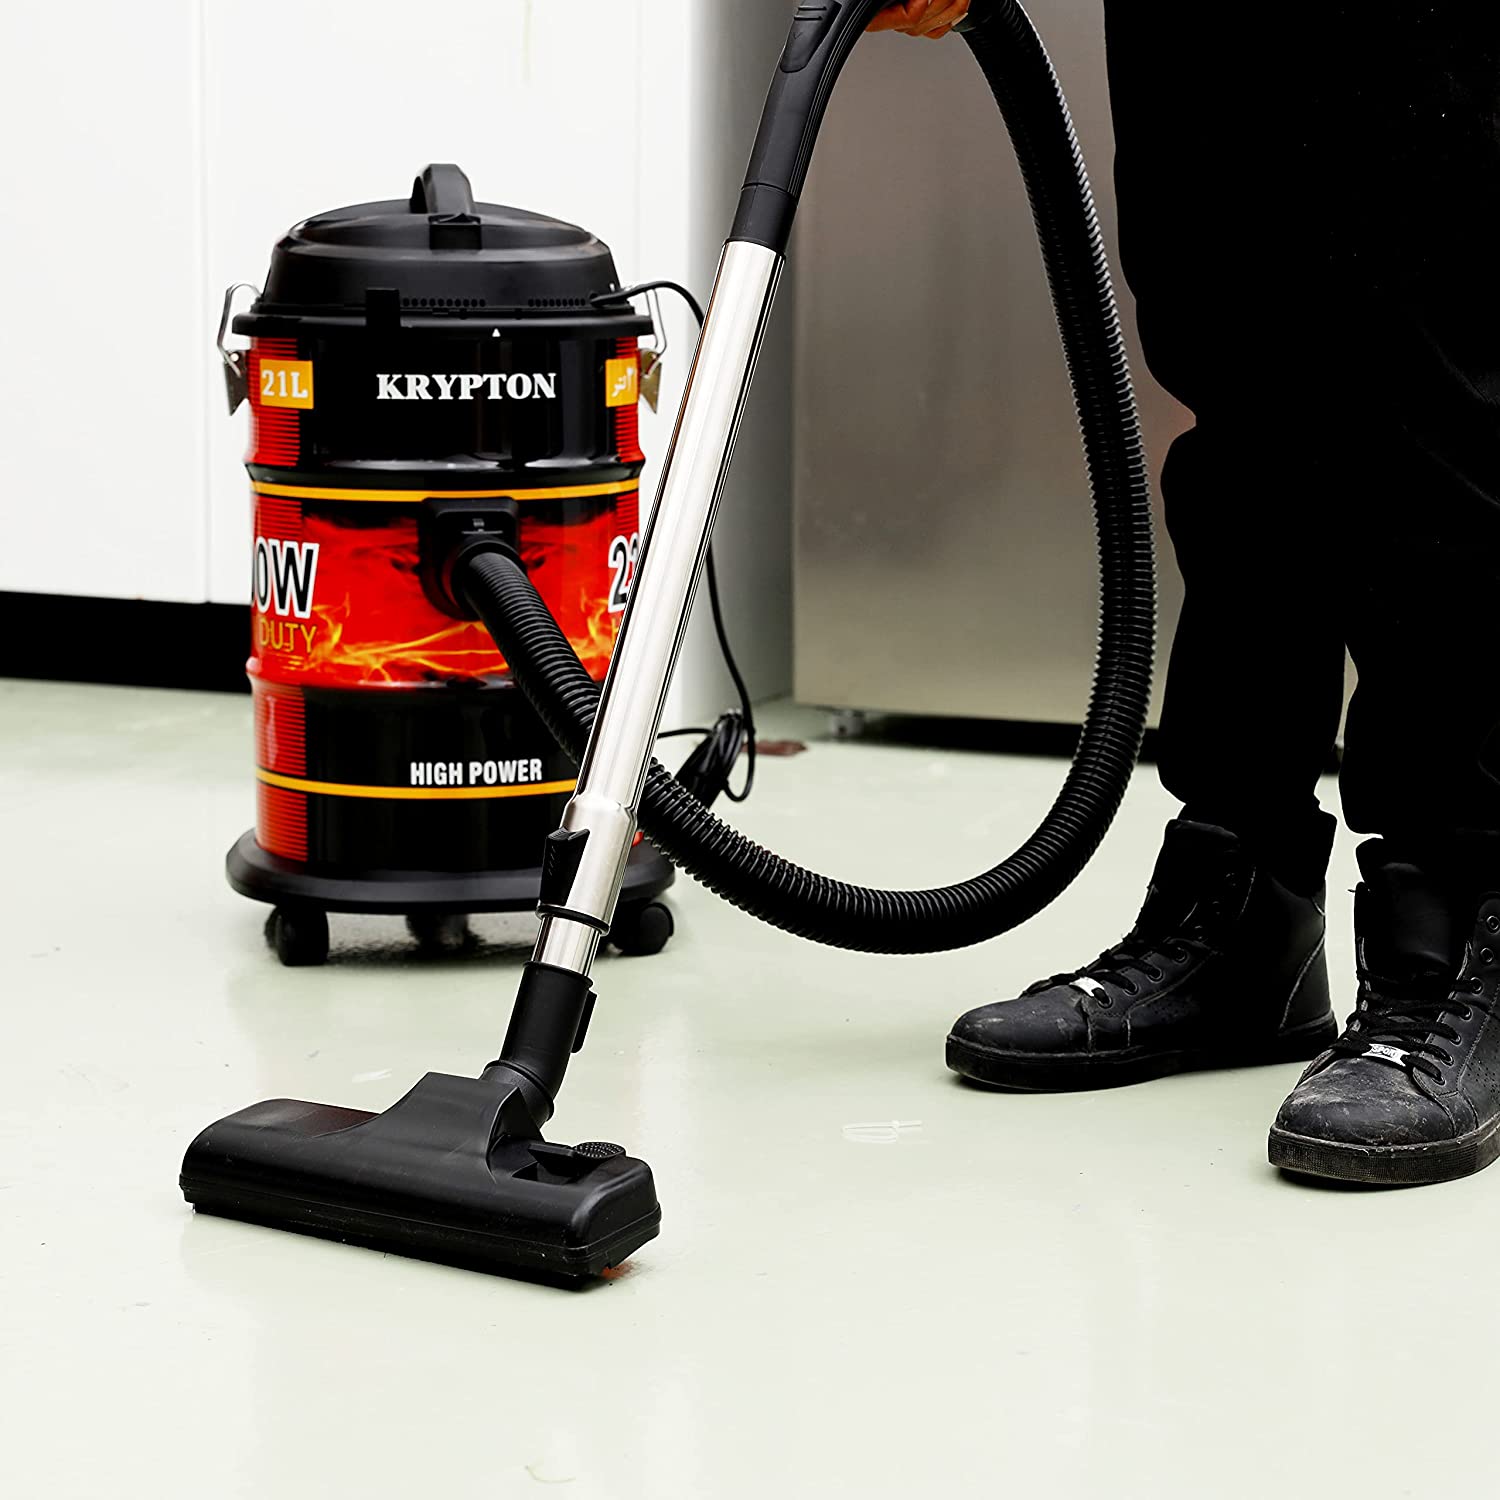 Krypton 2300Watts Drum Vacuum Cleaner Black | Cleaning Accessories | Halabh.com